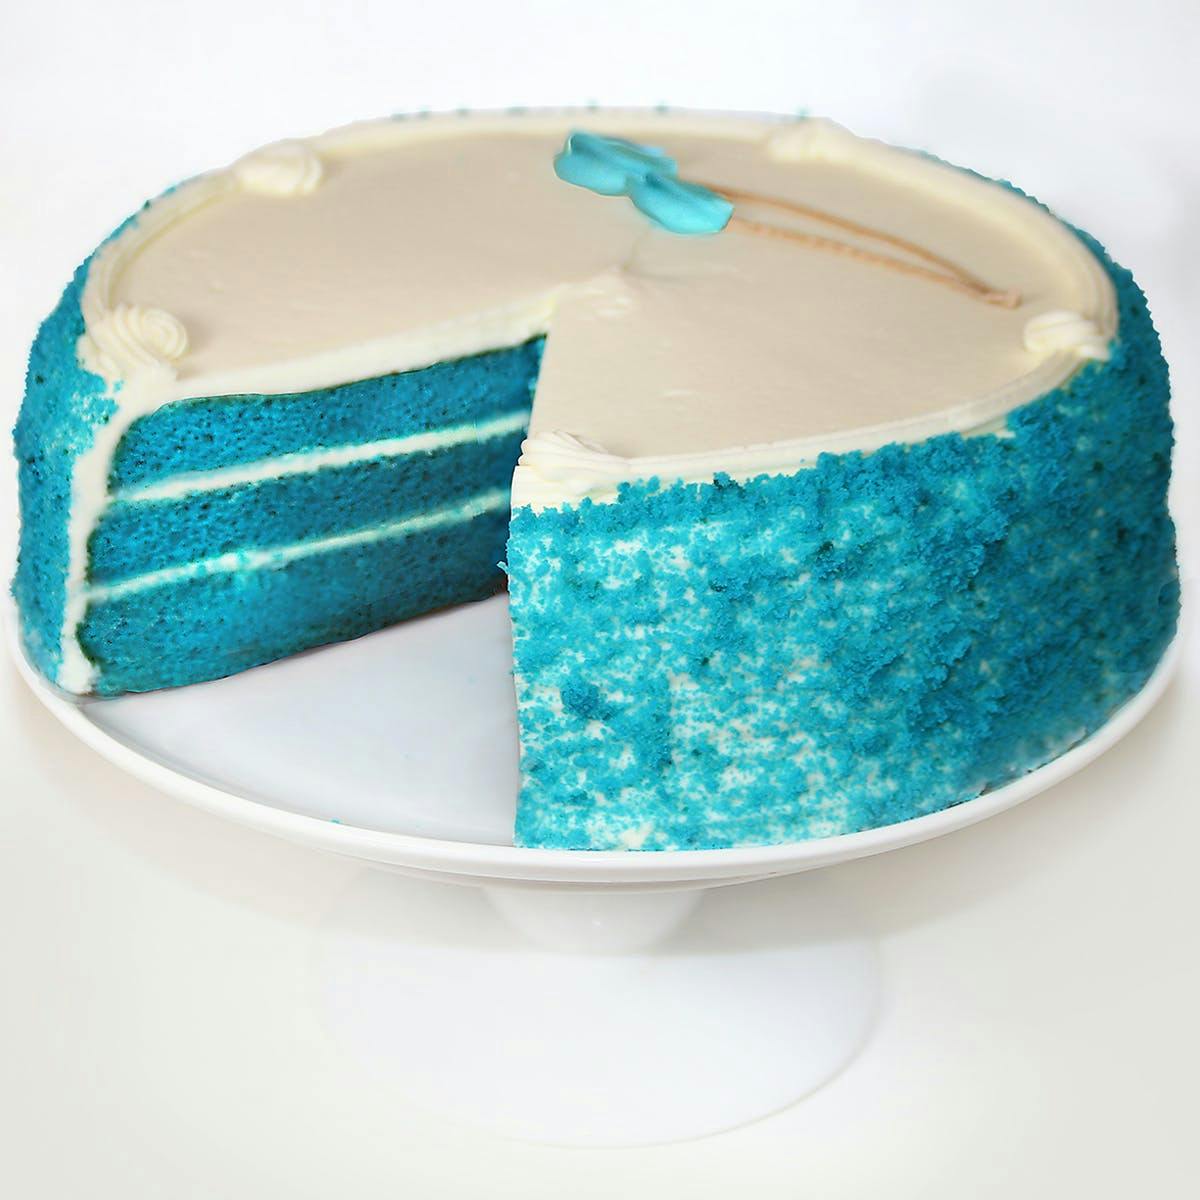 Carousel Cake - Charity Fent Cake Design - Springfield MO - Birthday